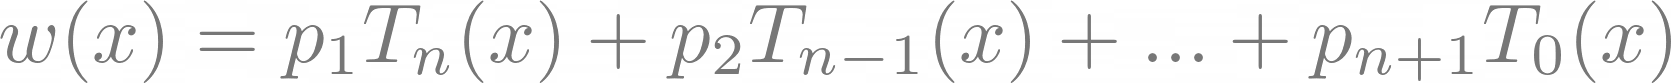 Latex: Linear combination of Chebyshev polynomials